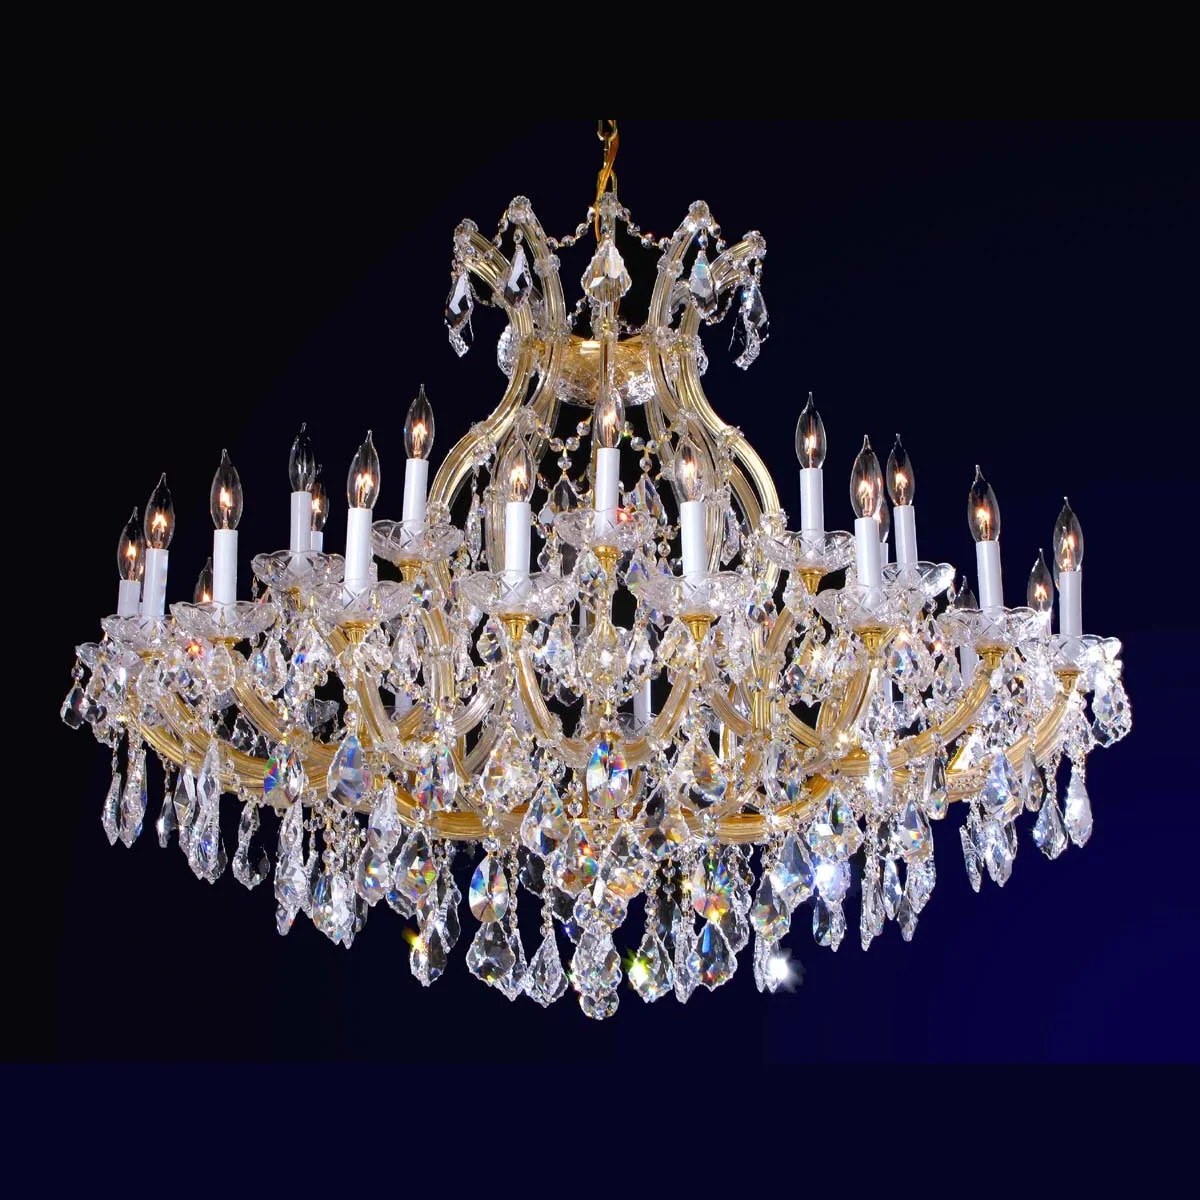 zhongshan manufacturer 30 lights silver golden candle crystal chandeliers guangzhou